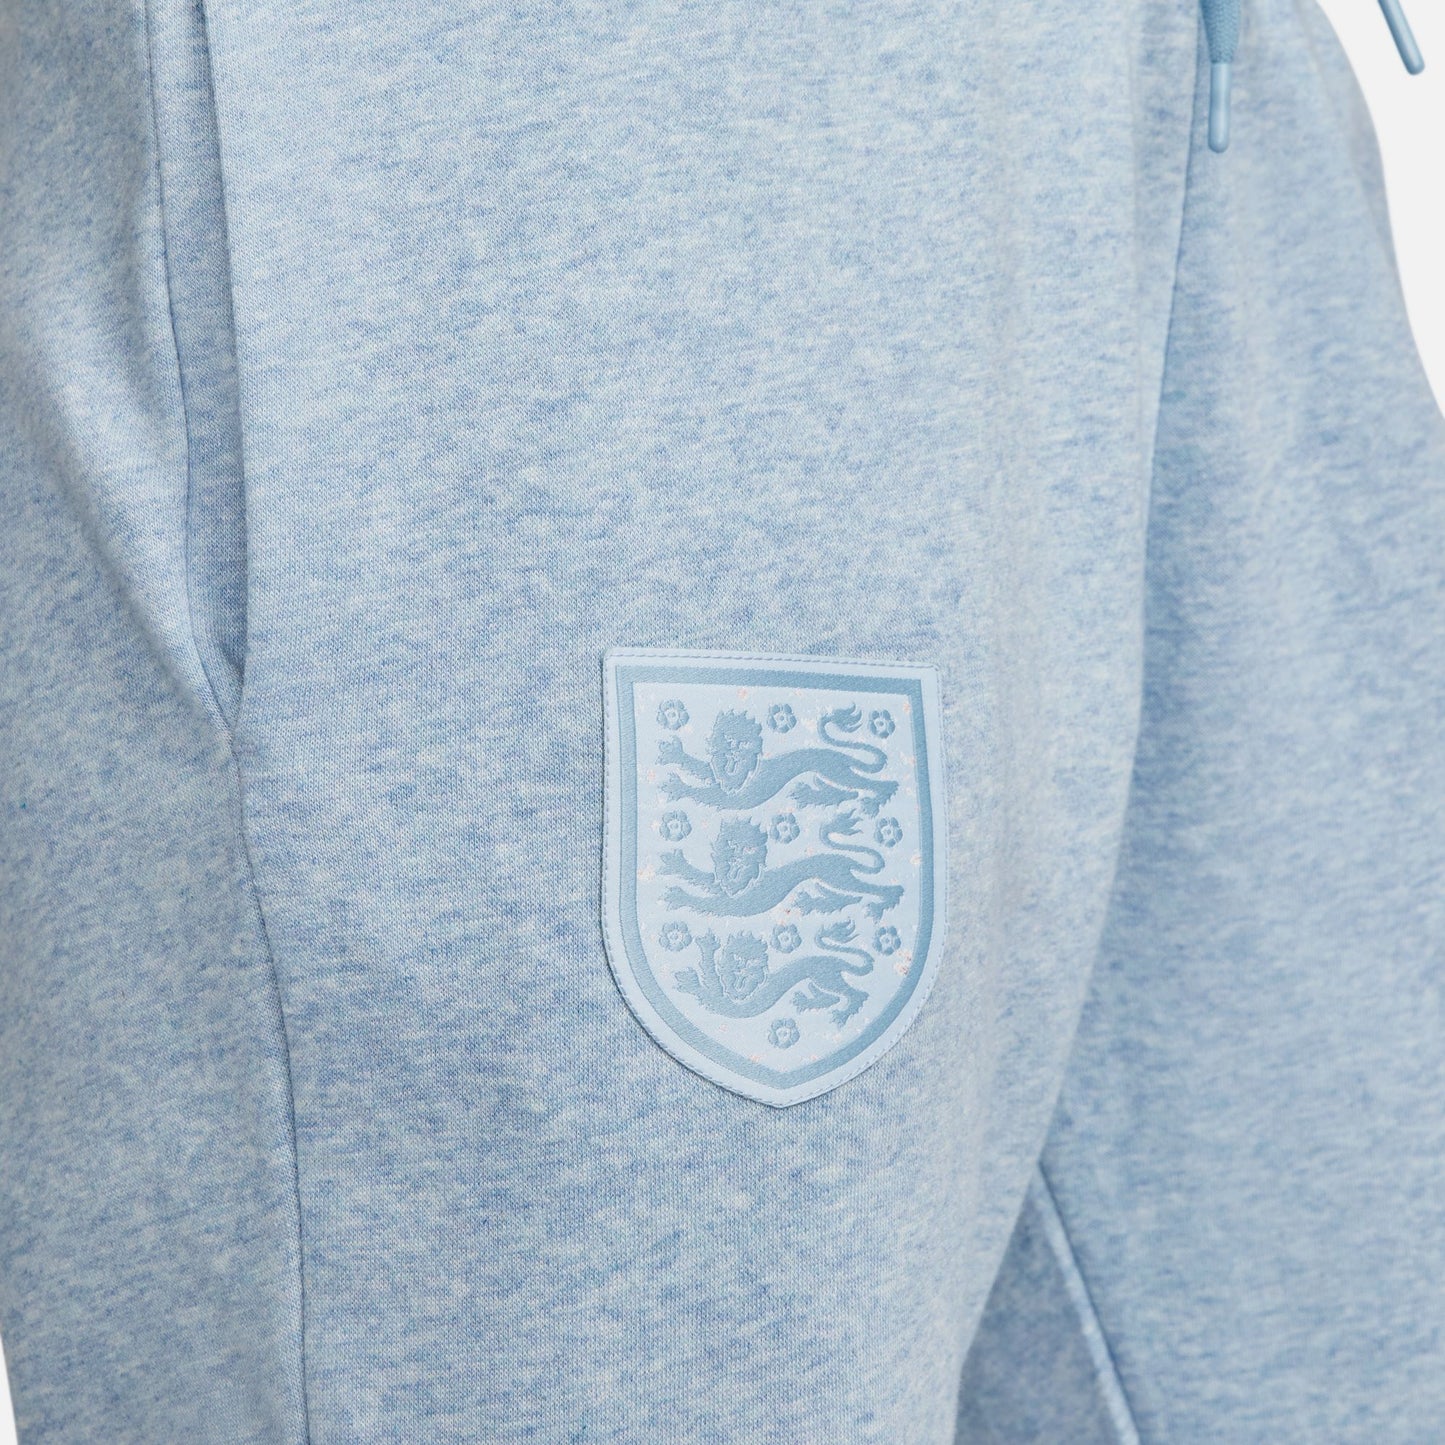 England Club Fleece Women's Nike Mid-Rise Pants